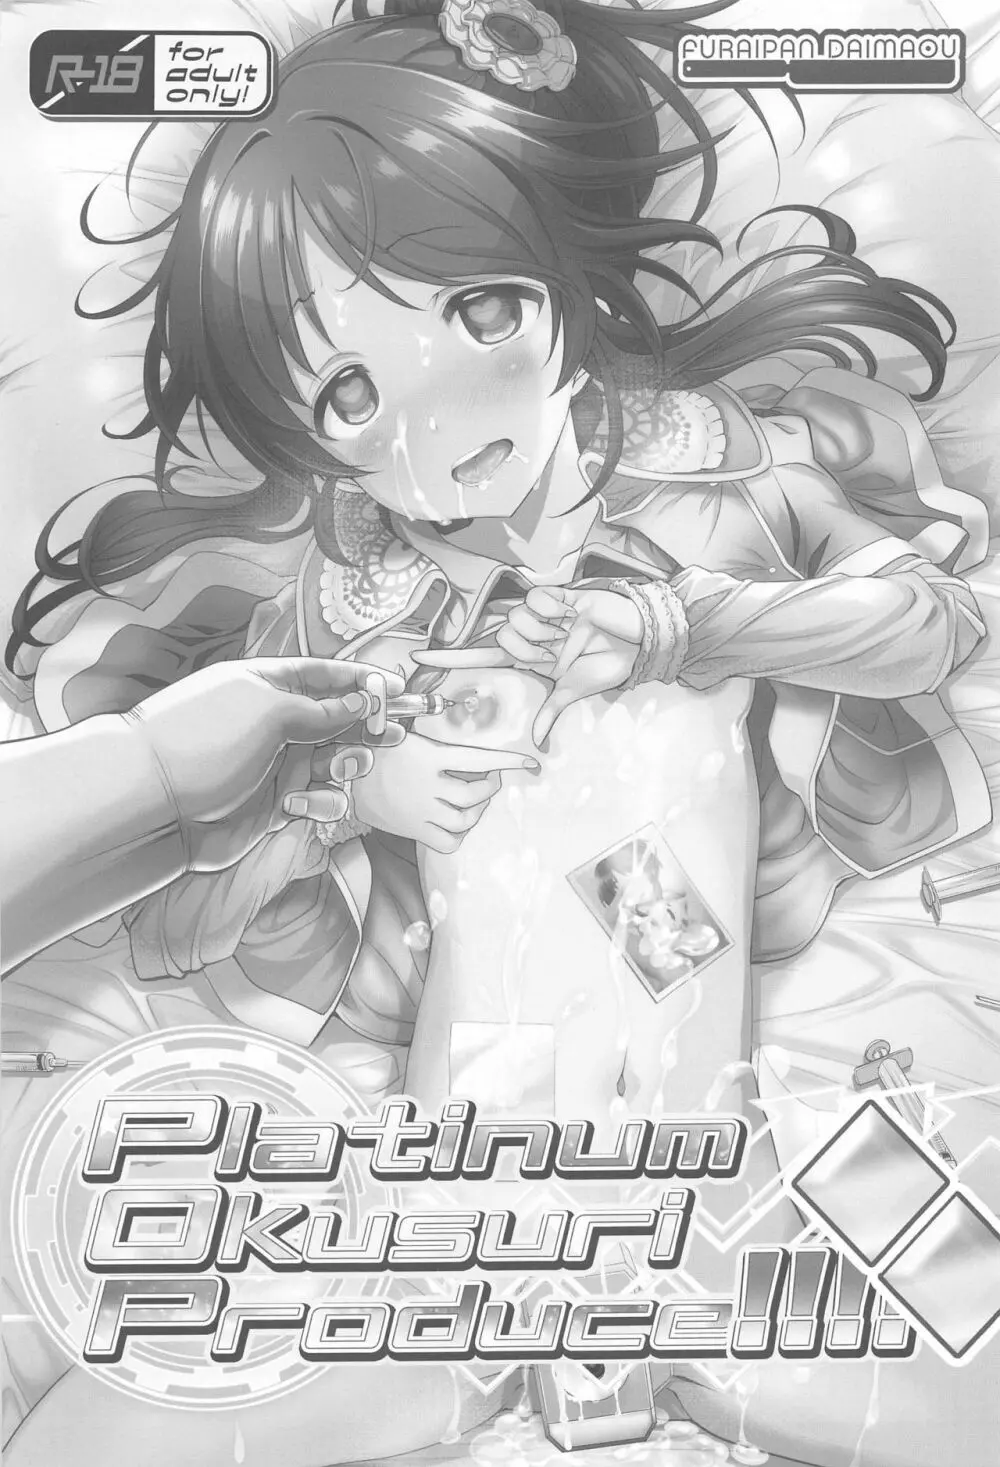 Platinum Okusuri Produce!!!! ◇◇ - page2